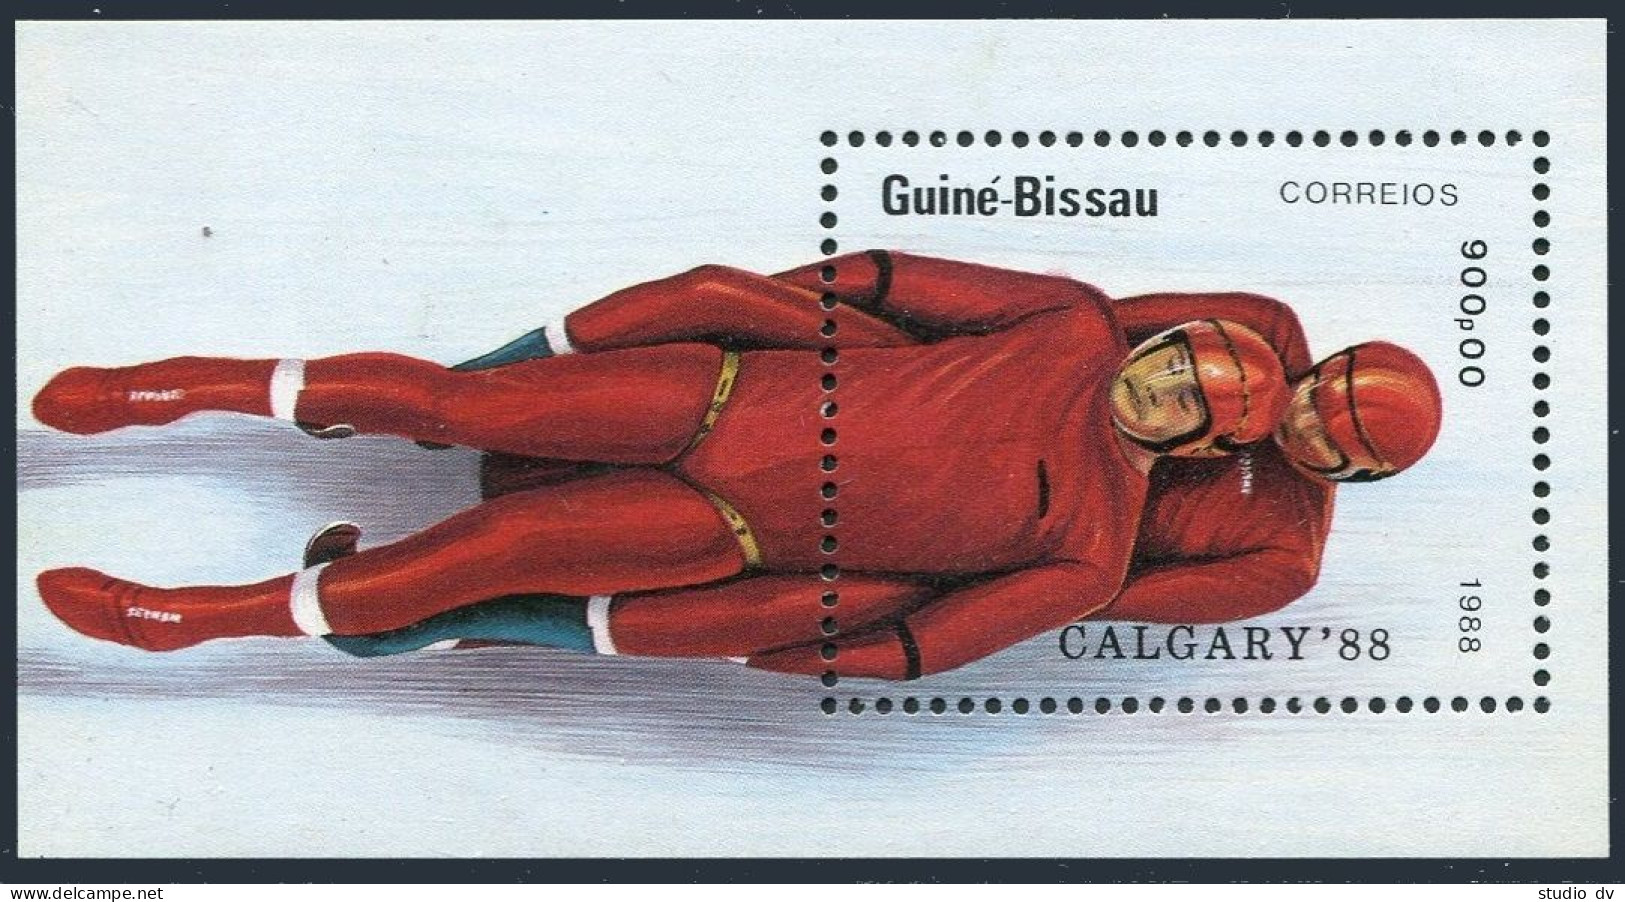 Guinea Bissau 704-710,710A,MNH.Olympics,Calgary-1988.Pairs Figure Skating,Luge,  - Guinea-Bissau